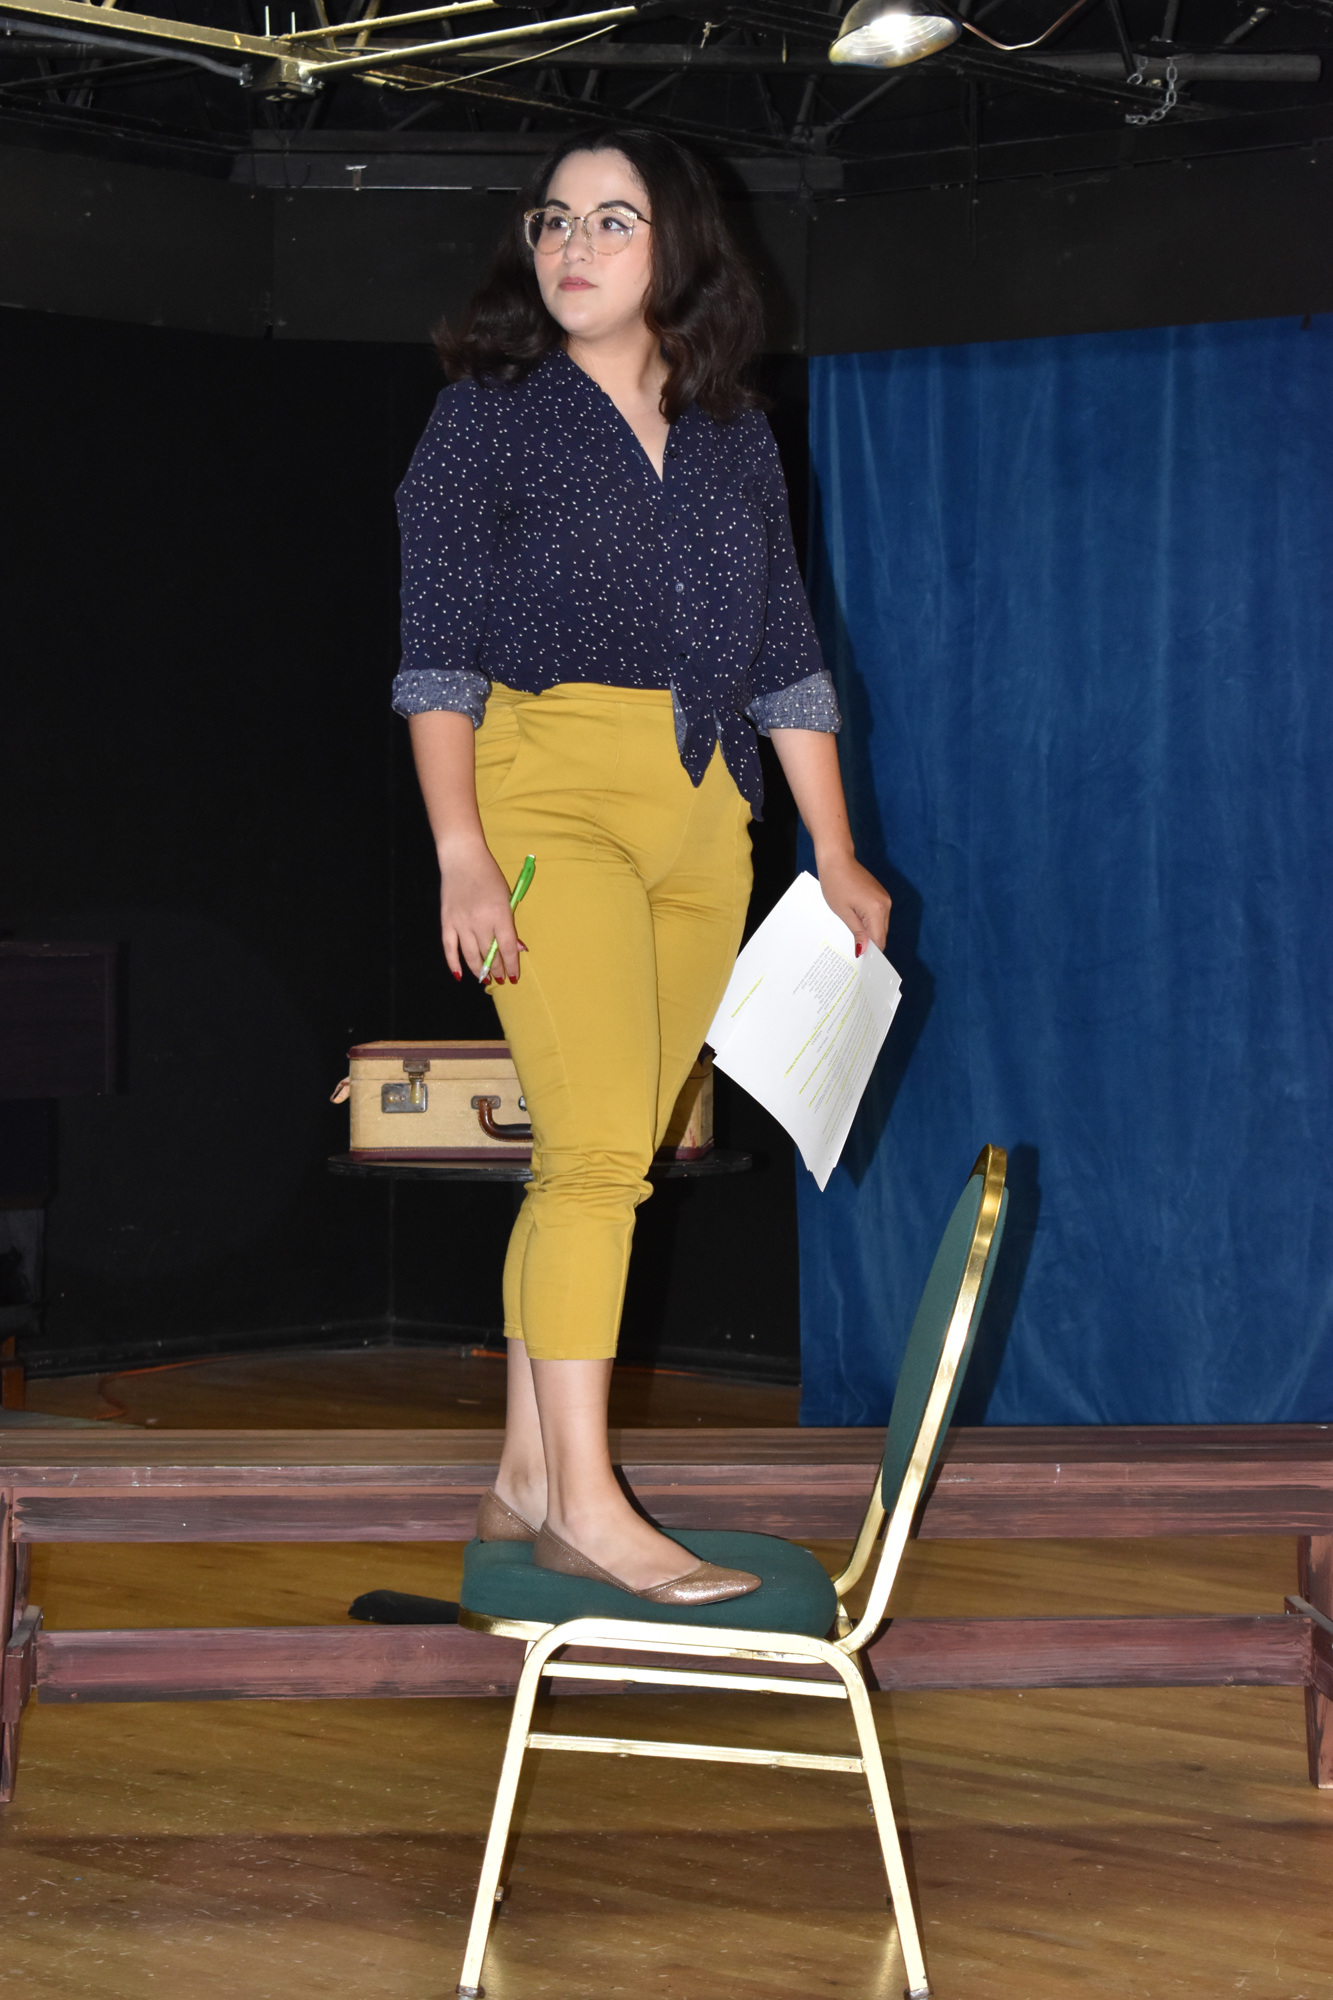 Johana Davila is a 2016 graduate of the University of Tampa’s musical theater program. Photo by Niki Kottmann